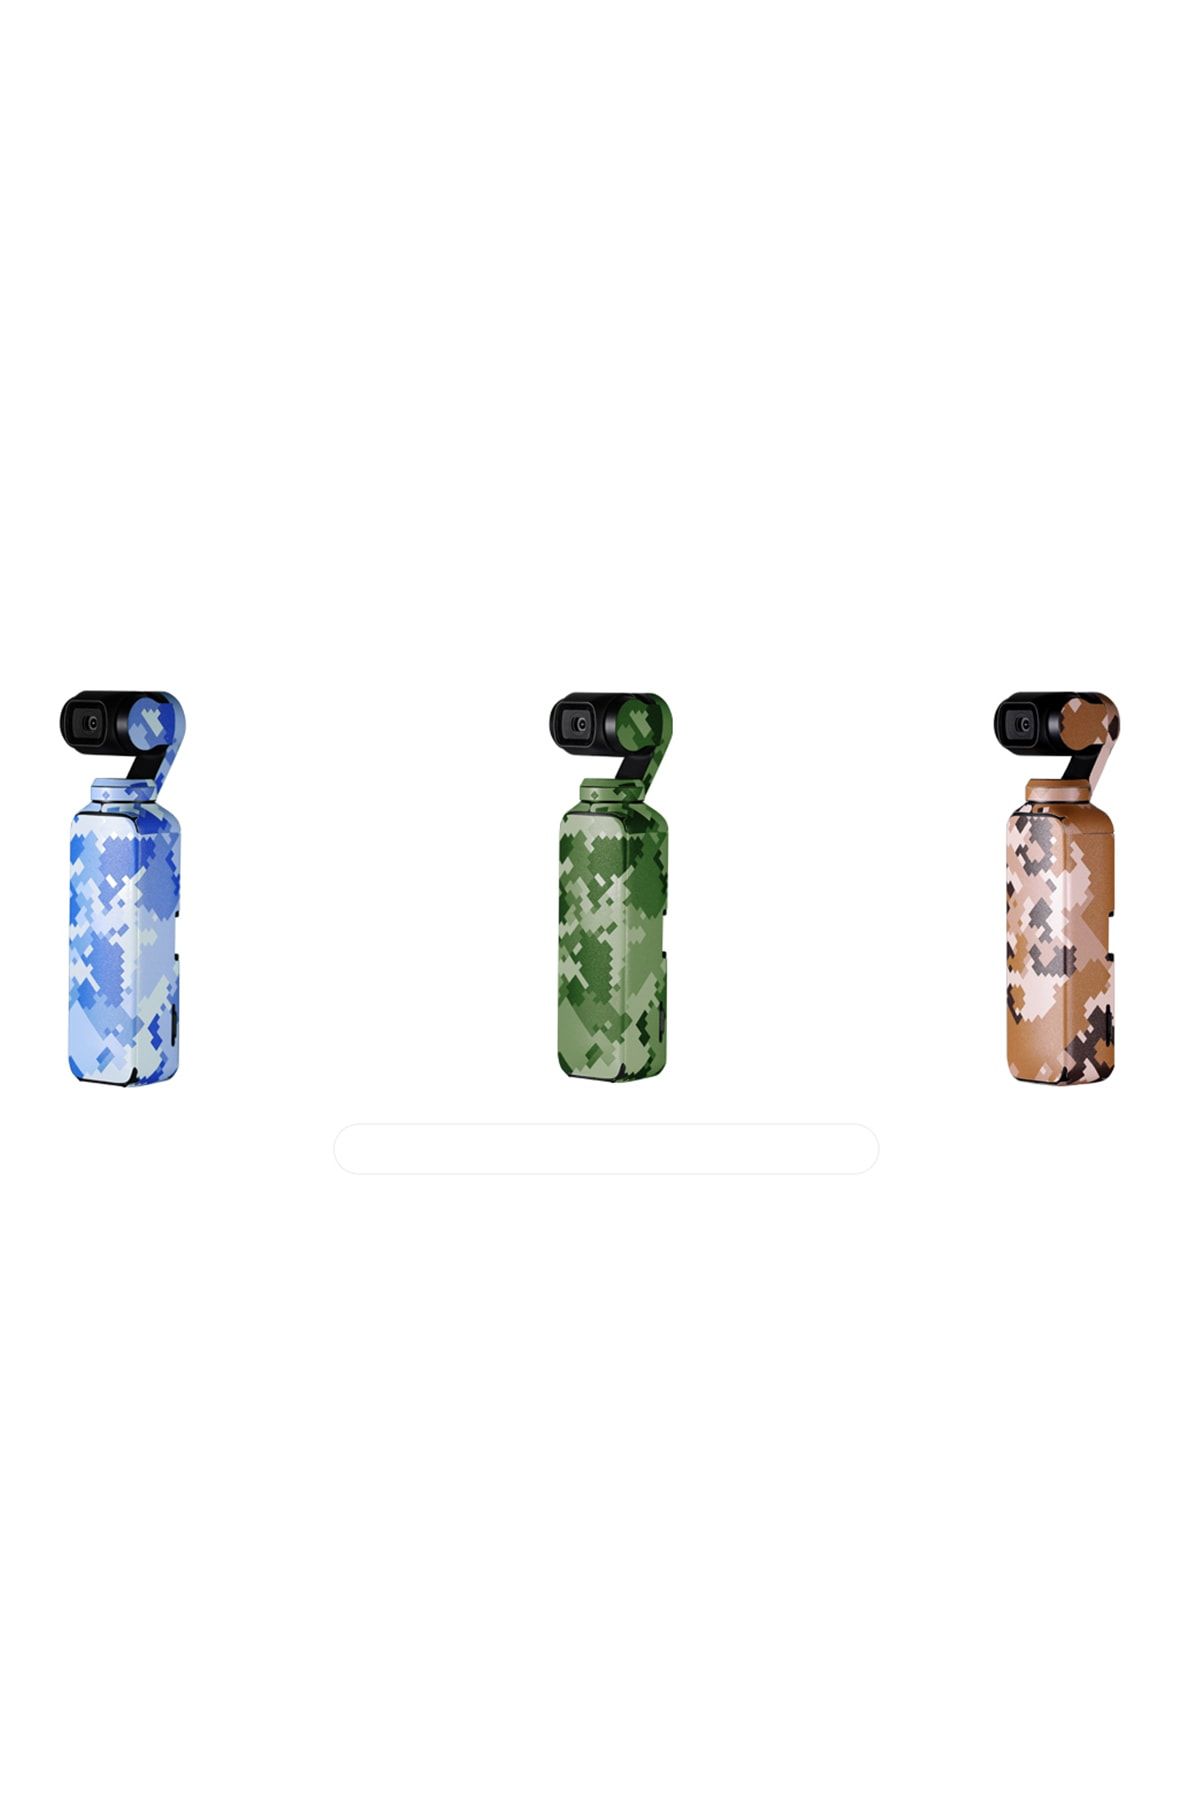 PgyTech Djı Osmo Pocket Için Sticker Set (camouflage Set)